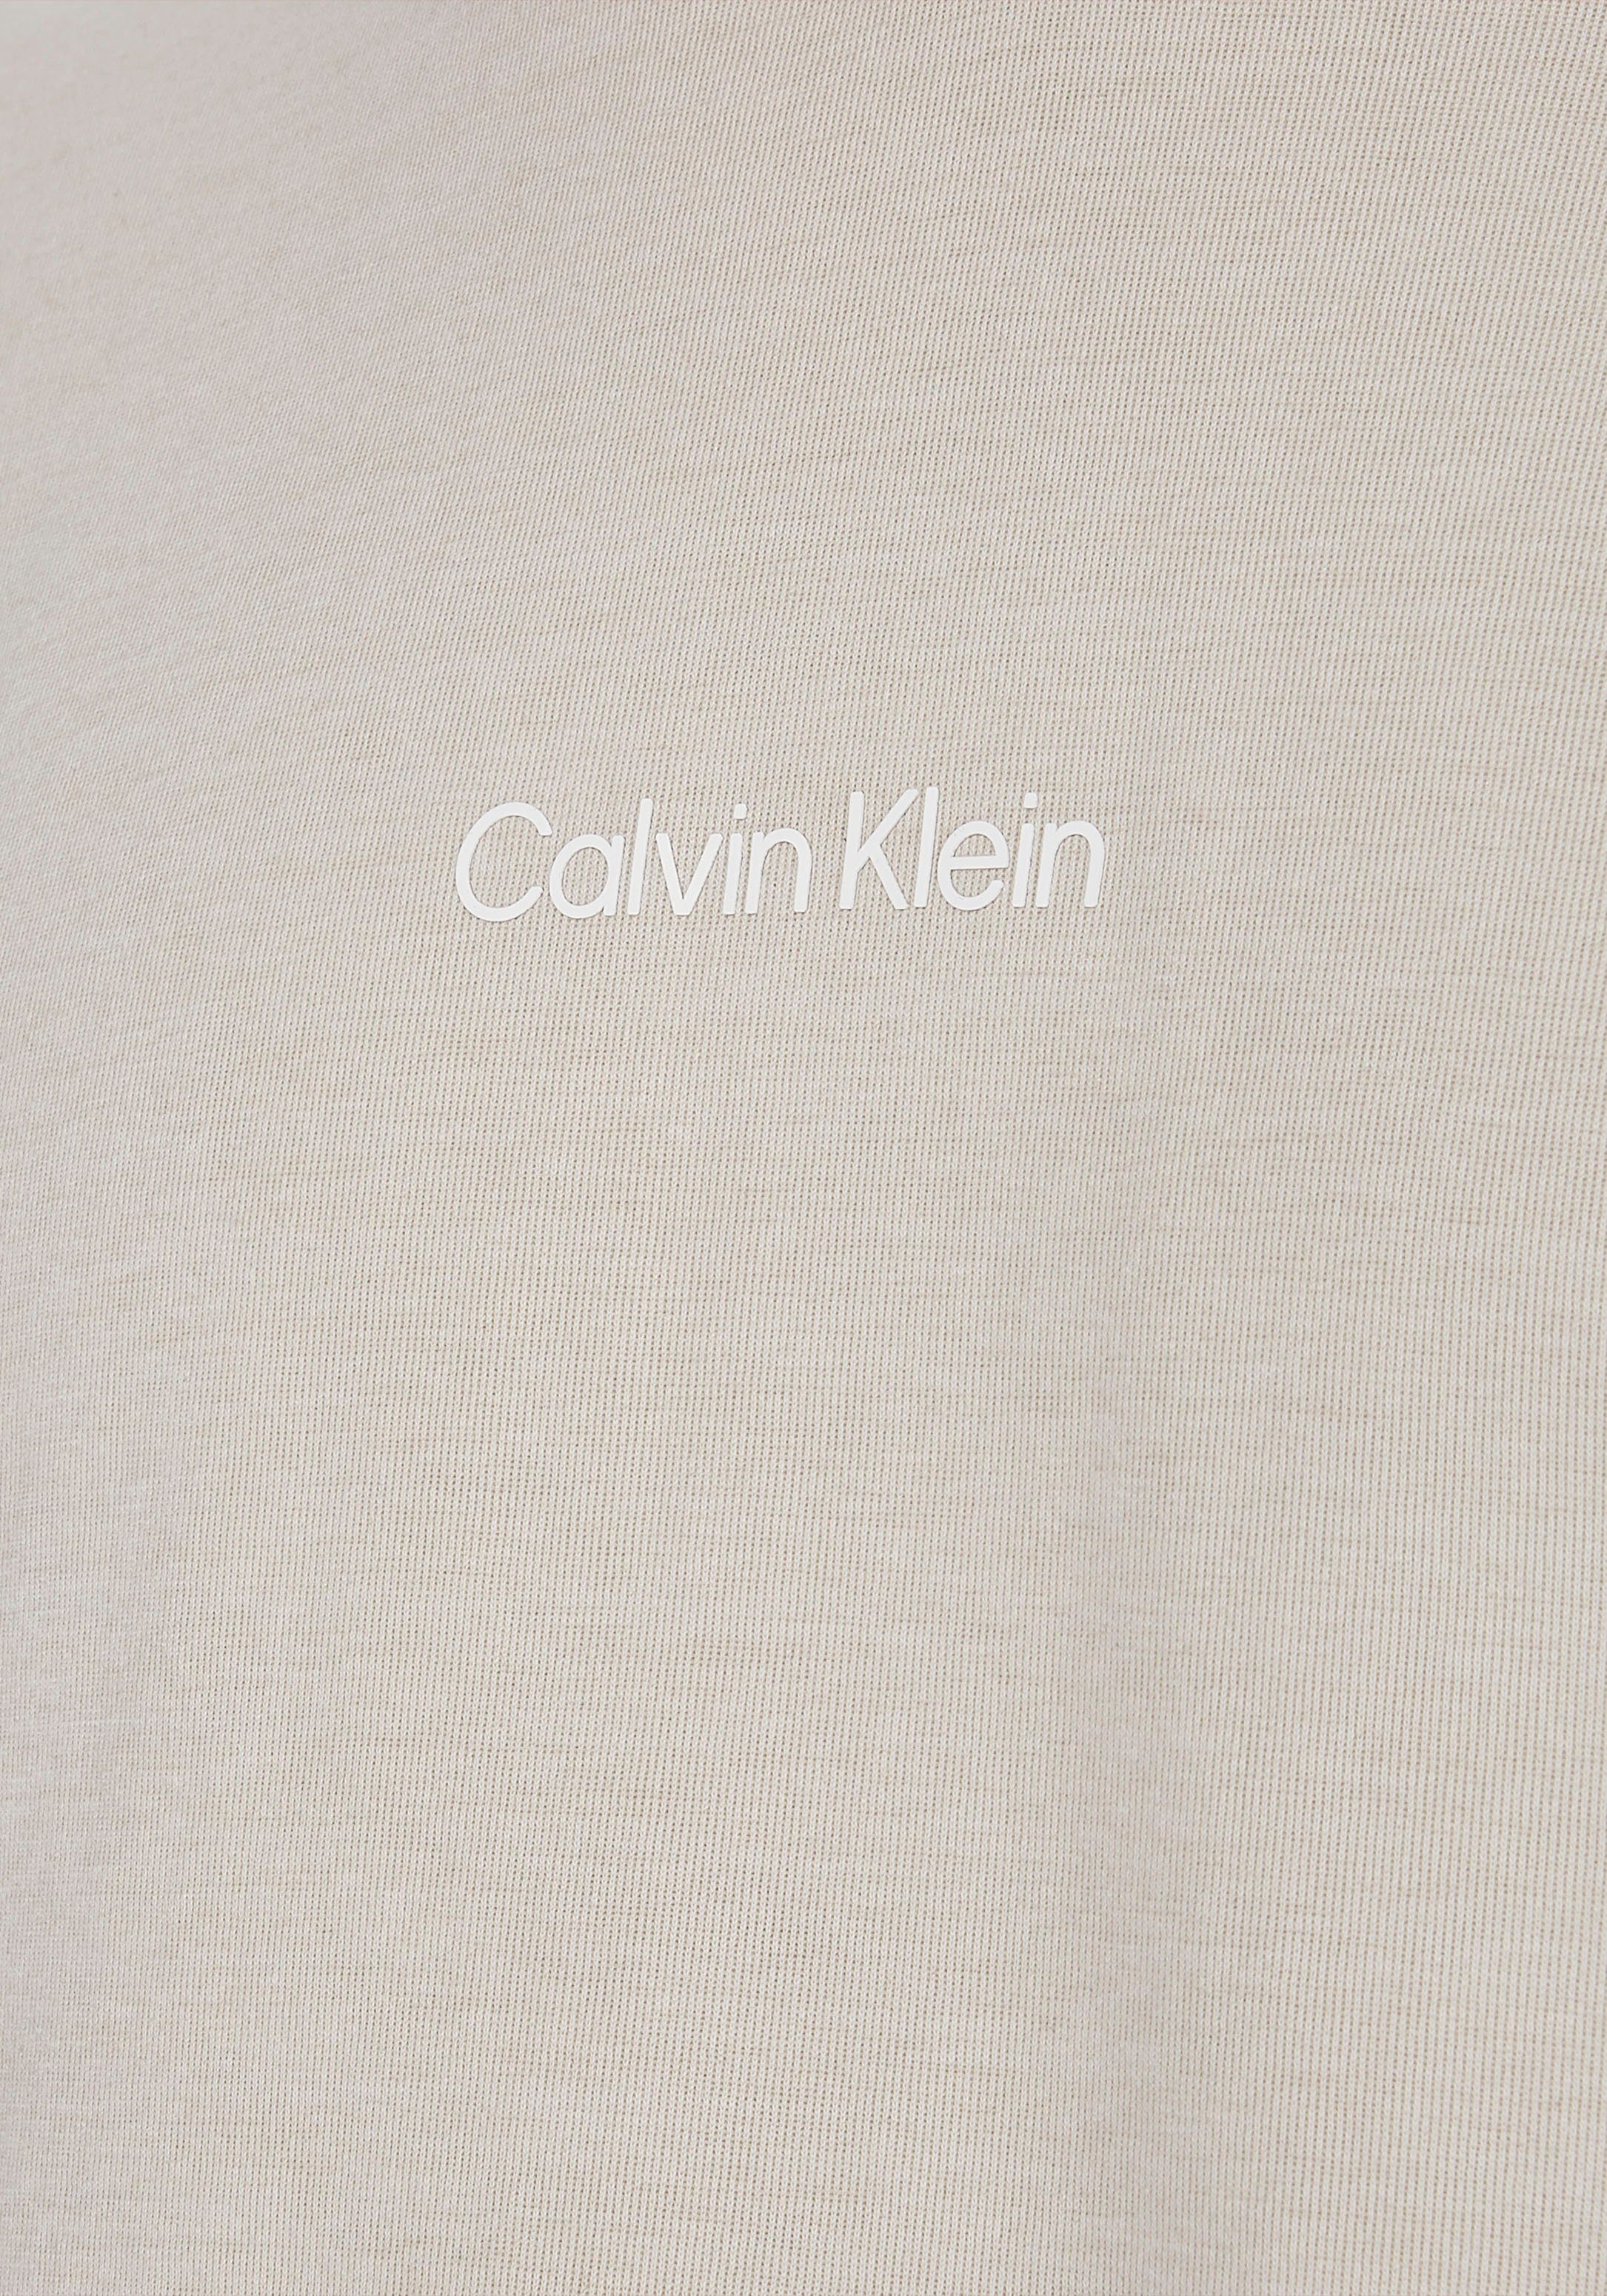 Herren Pullover Calvin Klein Kapuzensweatshirt INTERLOCK MICRO LOGO HOODIE